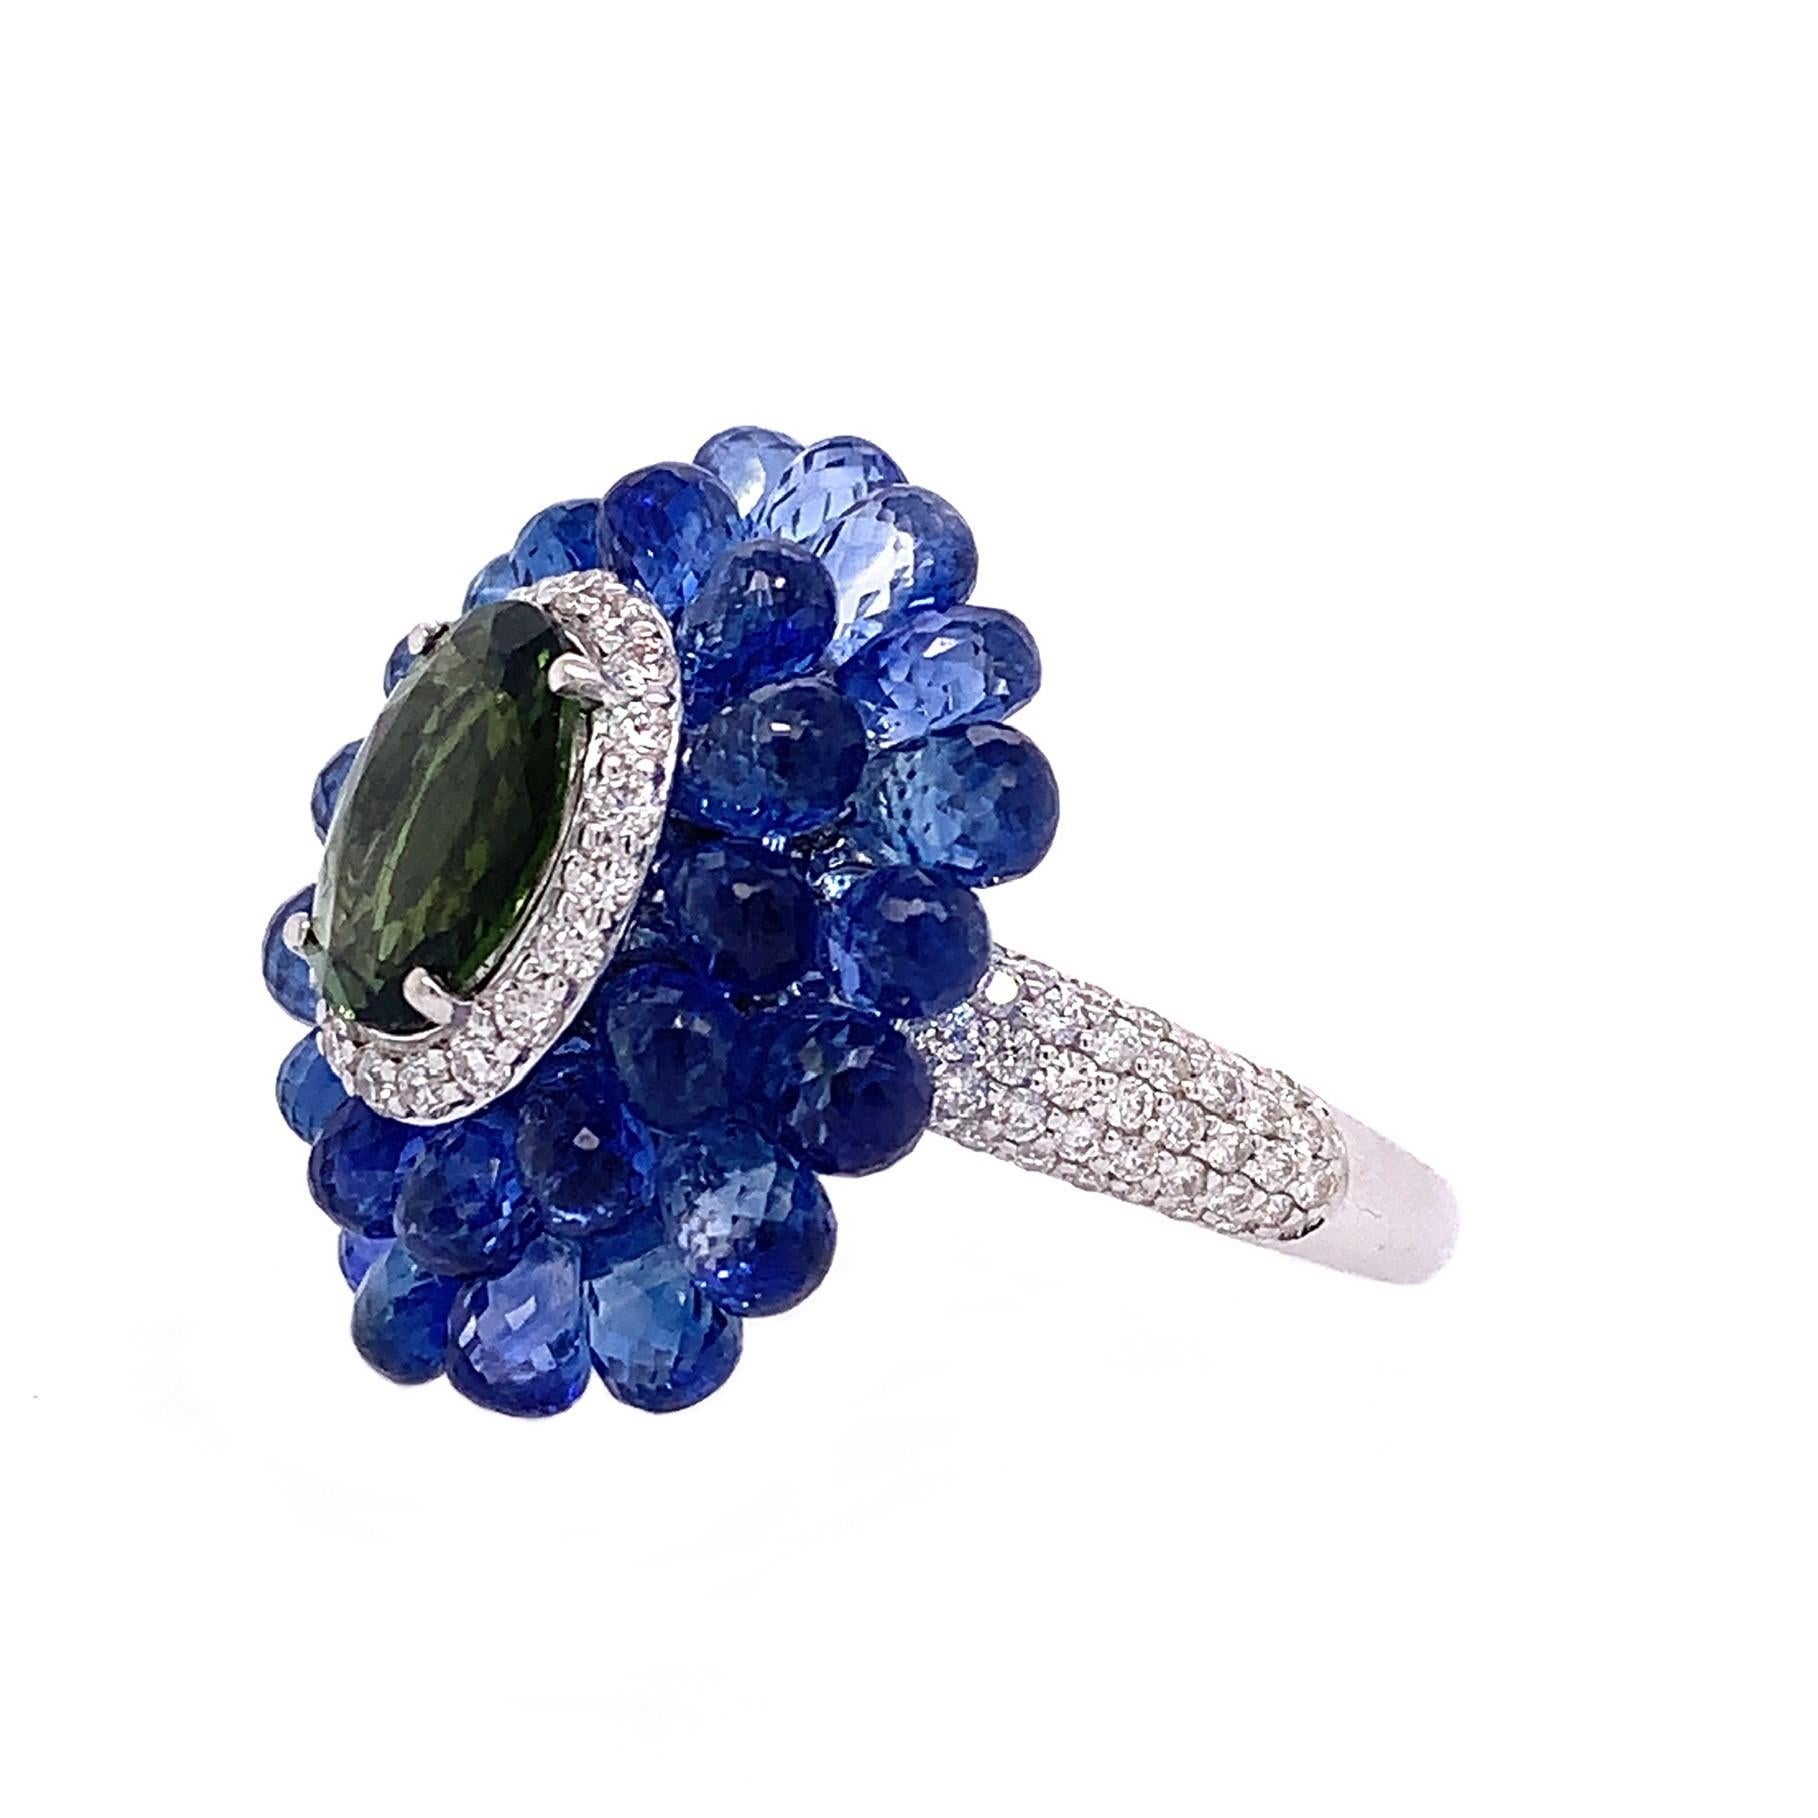 18K White Gold
Blue Sapphires: 11.34 carats
Green Tourmaline: 1.41 carat Tourmaline